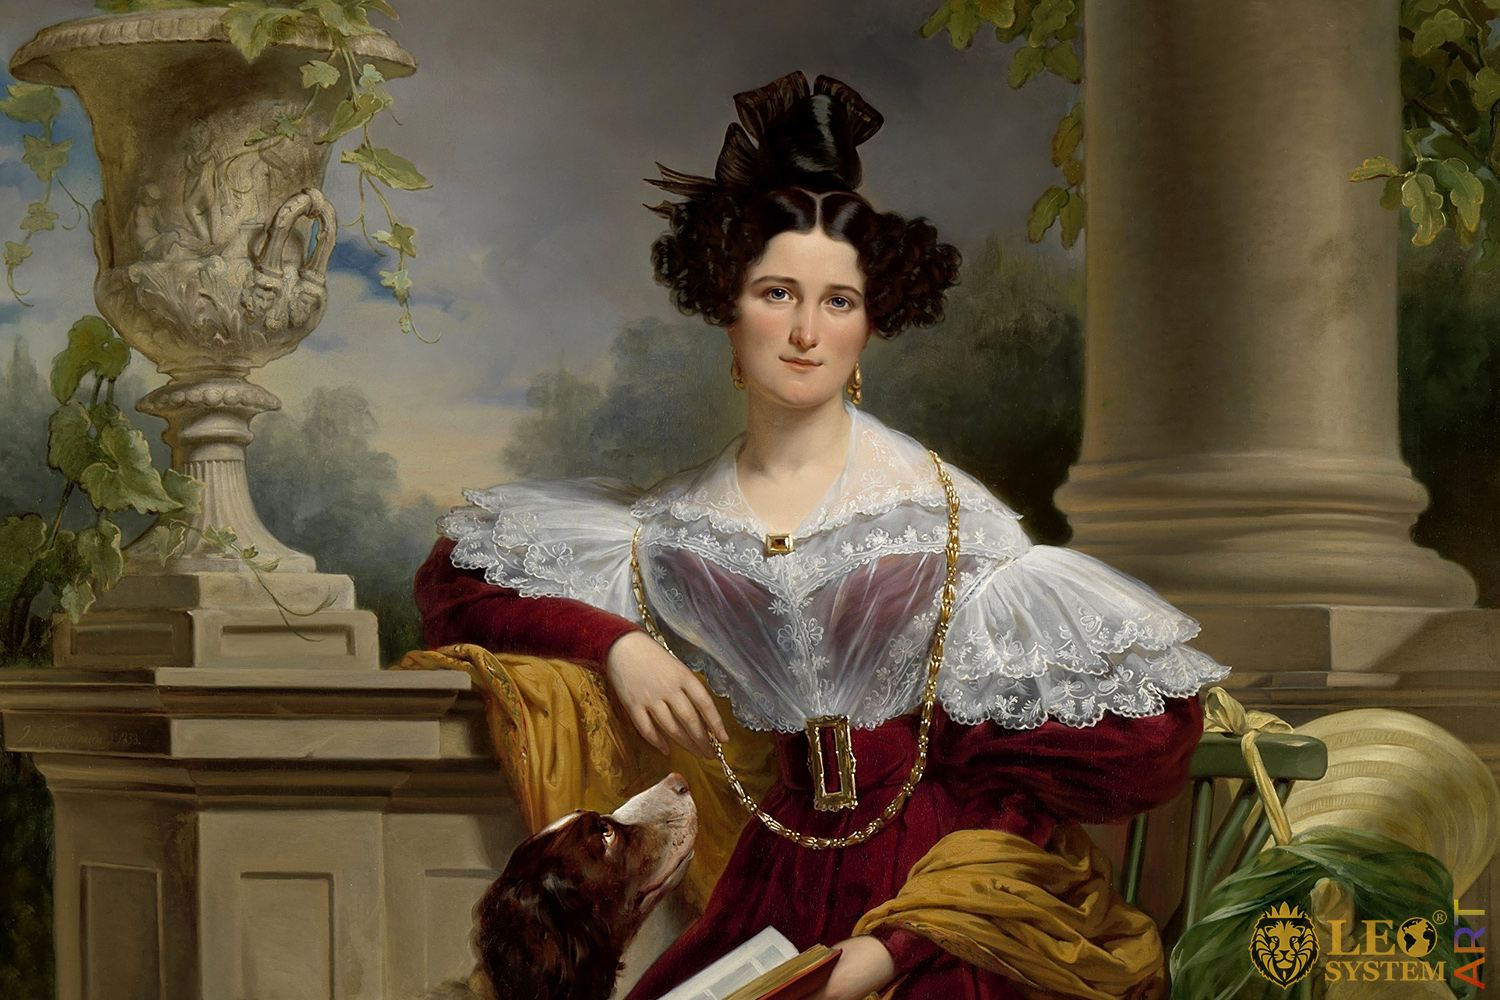 Portrait of Alida Christina Assink, Jan Adam Kruseman, 1833, Original Painting